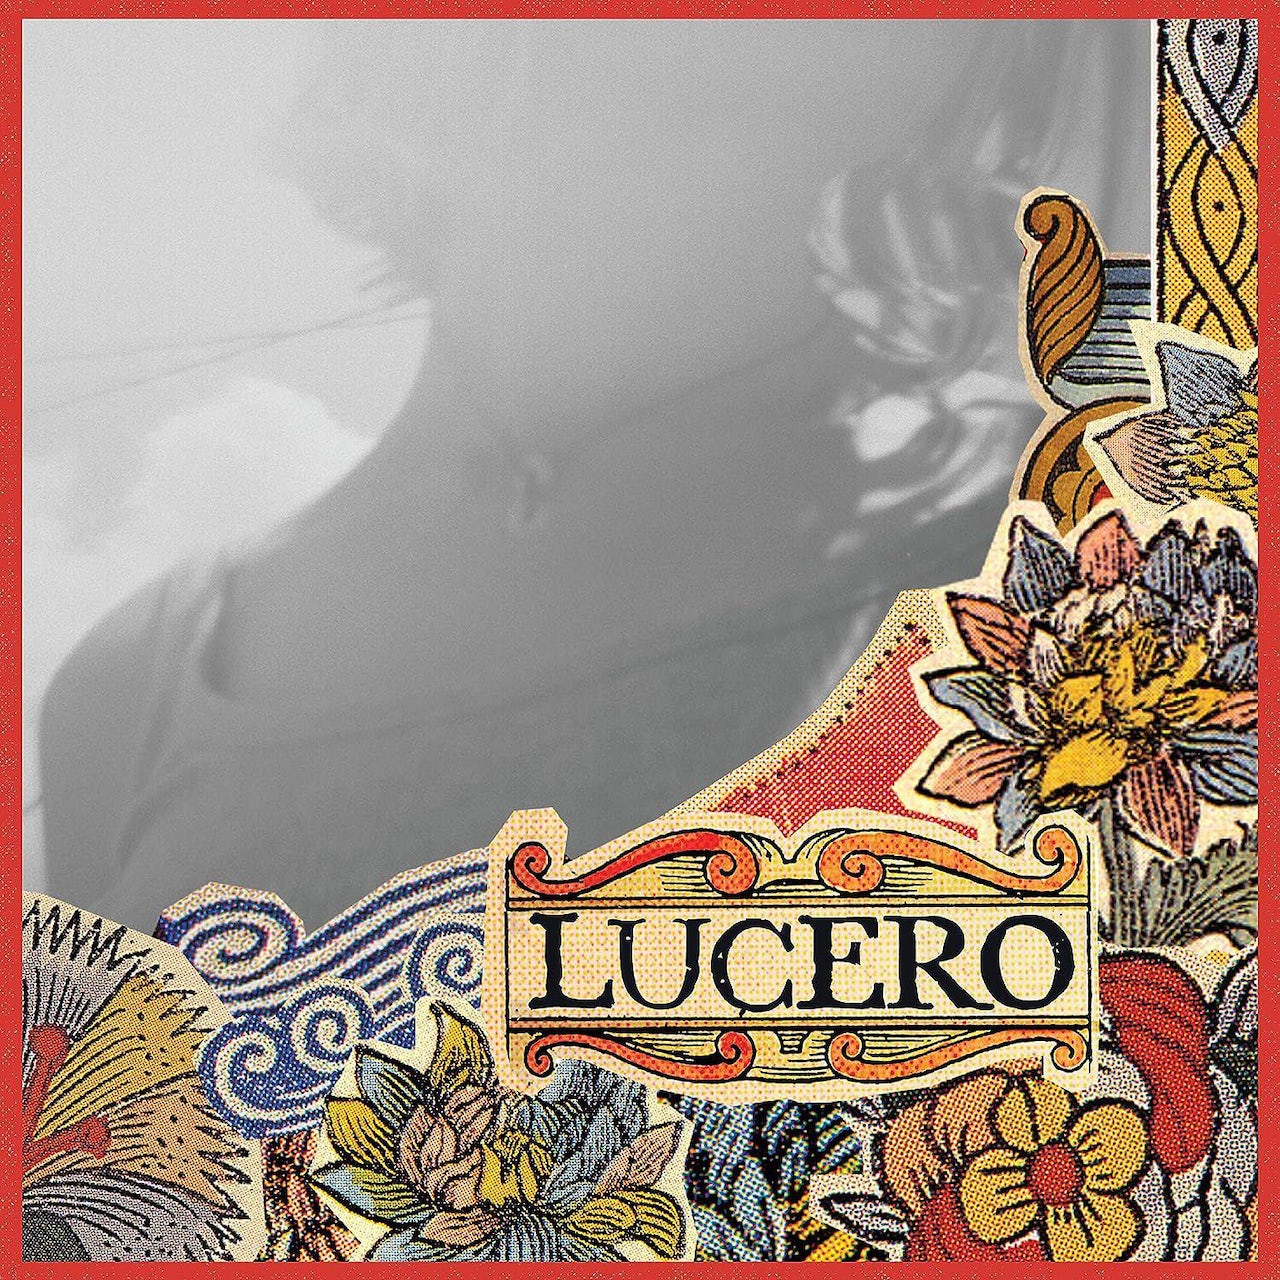 LUCERO - THAT MUCH FURTHER WEST 20TH ANNIVERSARY Vinyl LP